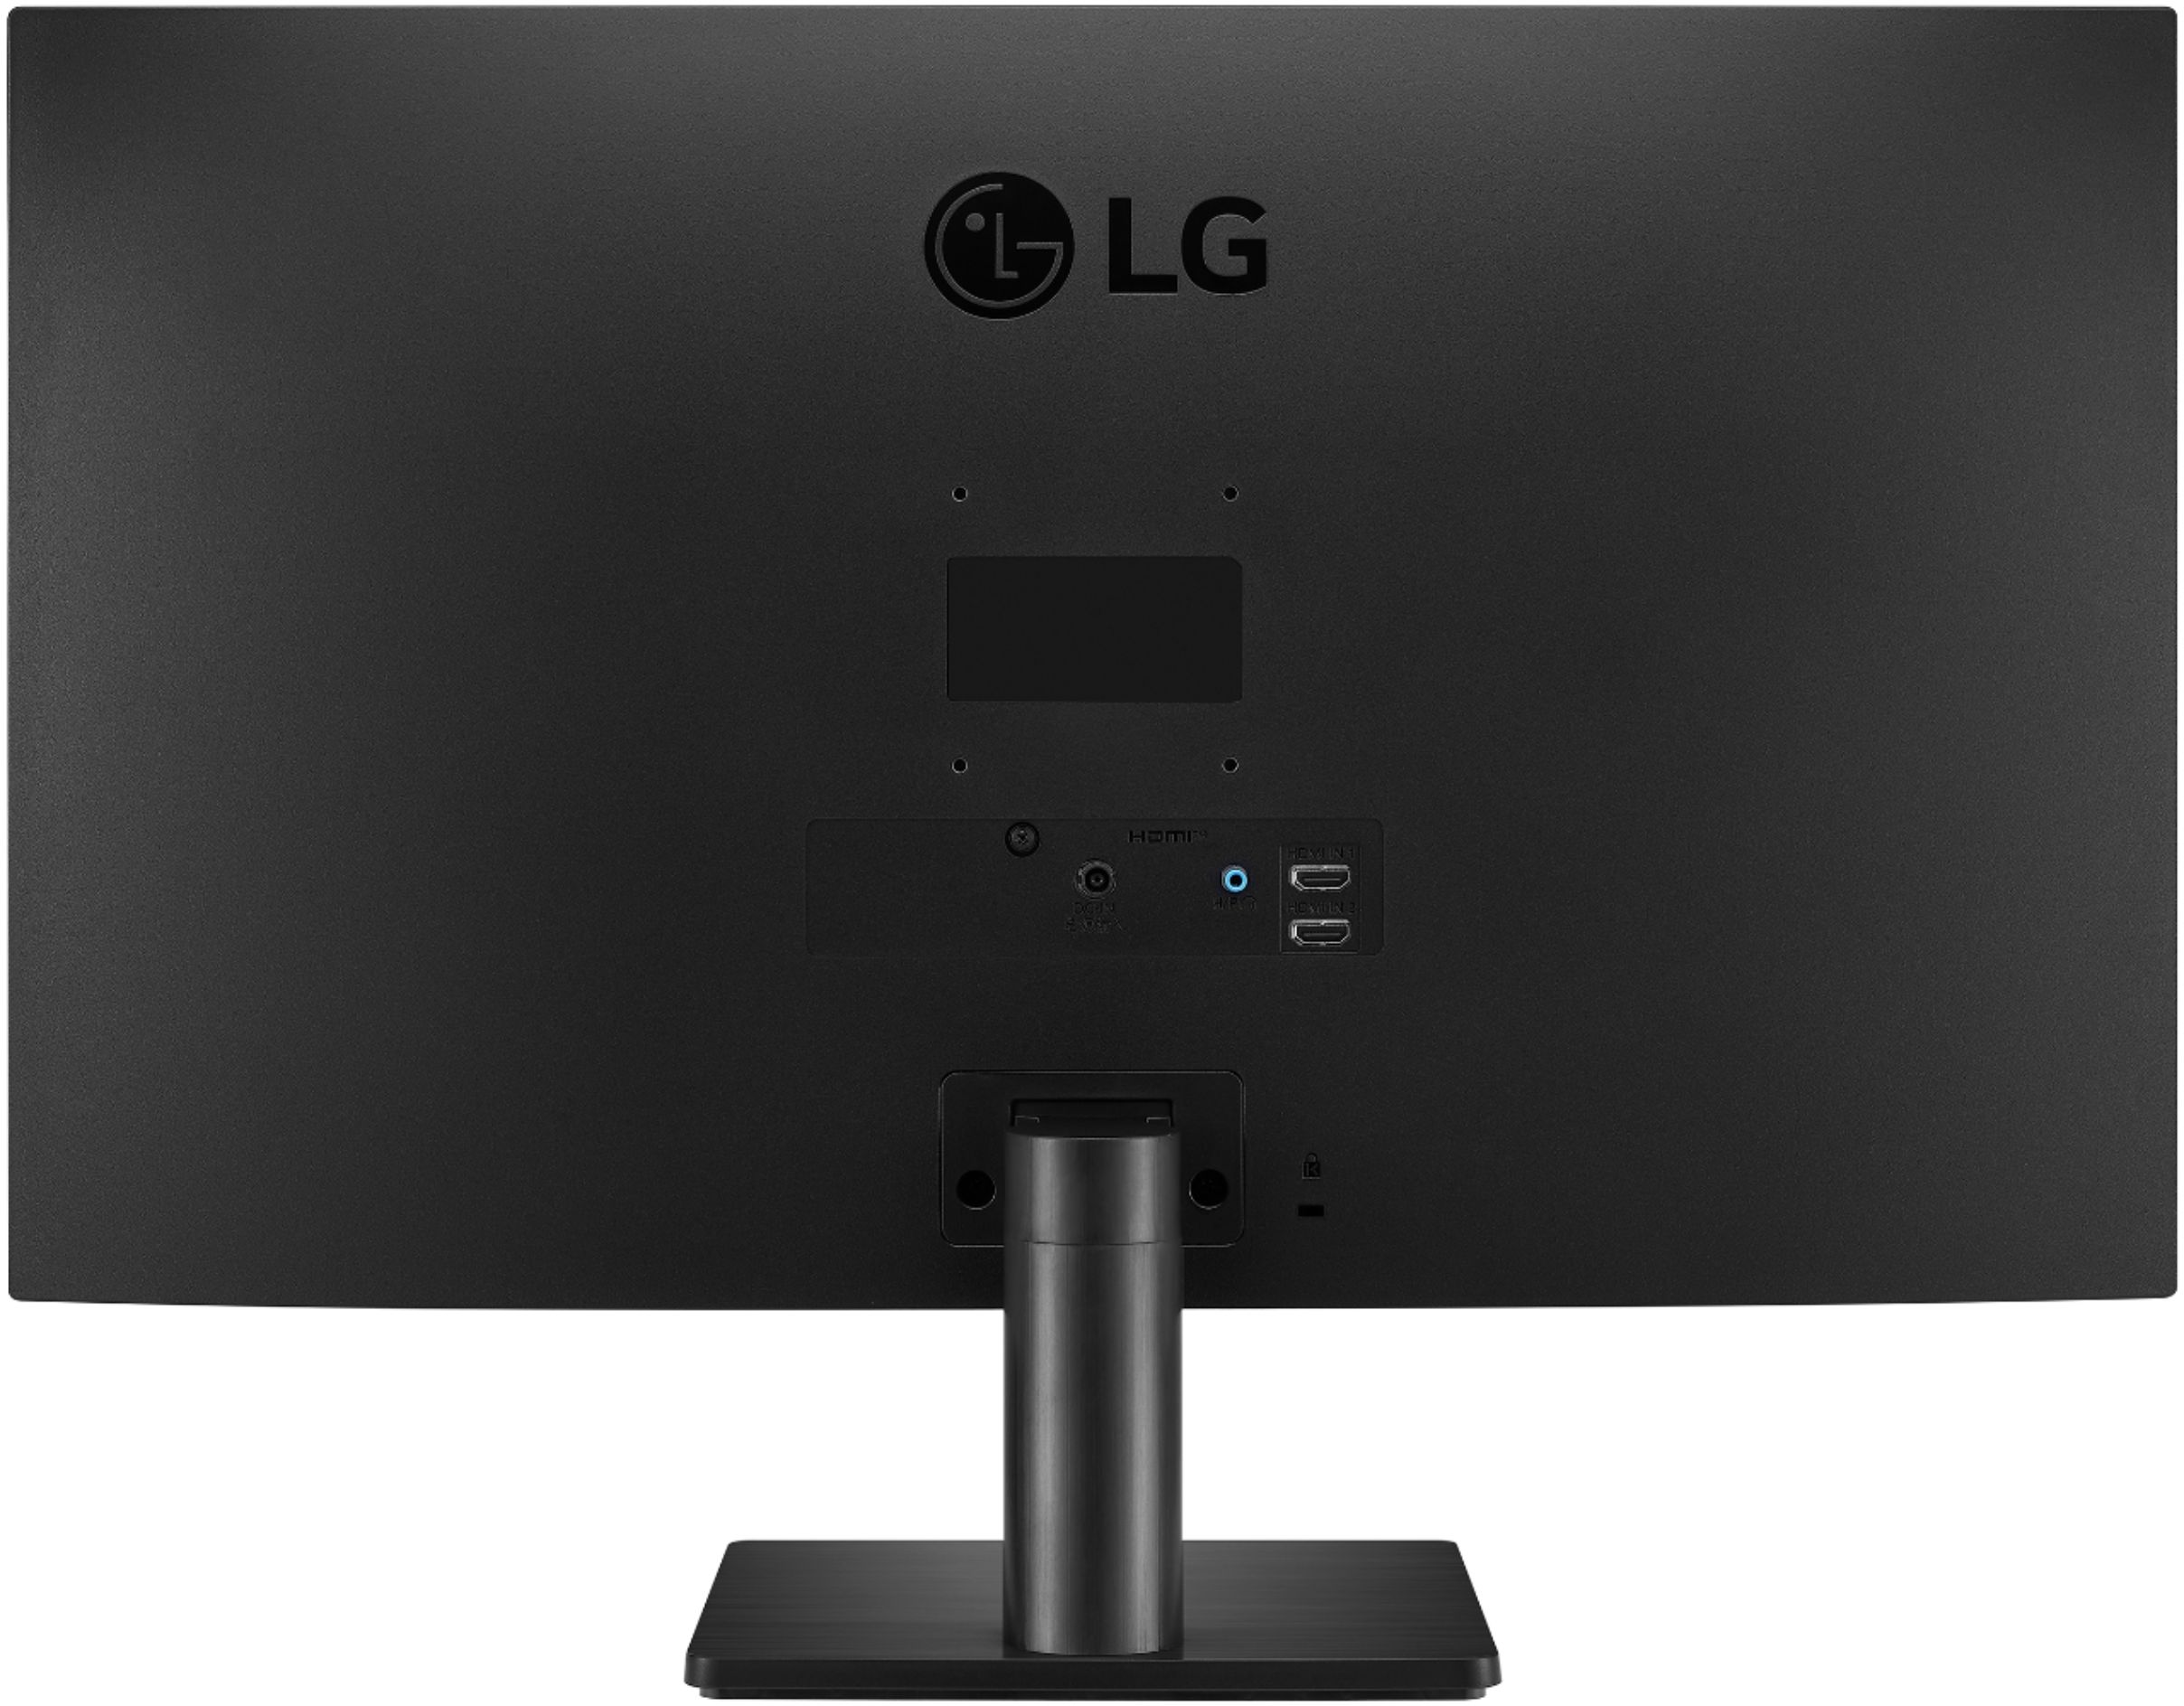 LG 27 FHD IPS 3-Side Borderless Monitor with Anti-Glare & AMD FreeSync™  (1920 x 1080) - 27MP40W-B 